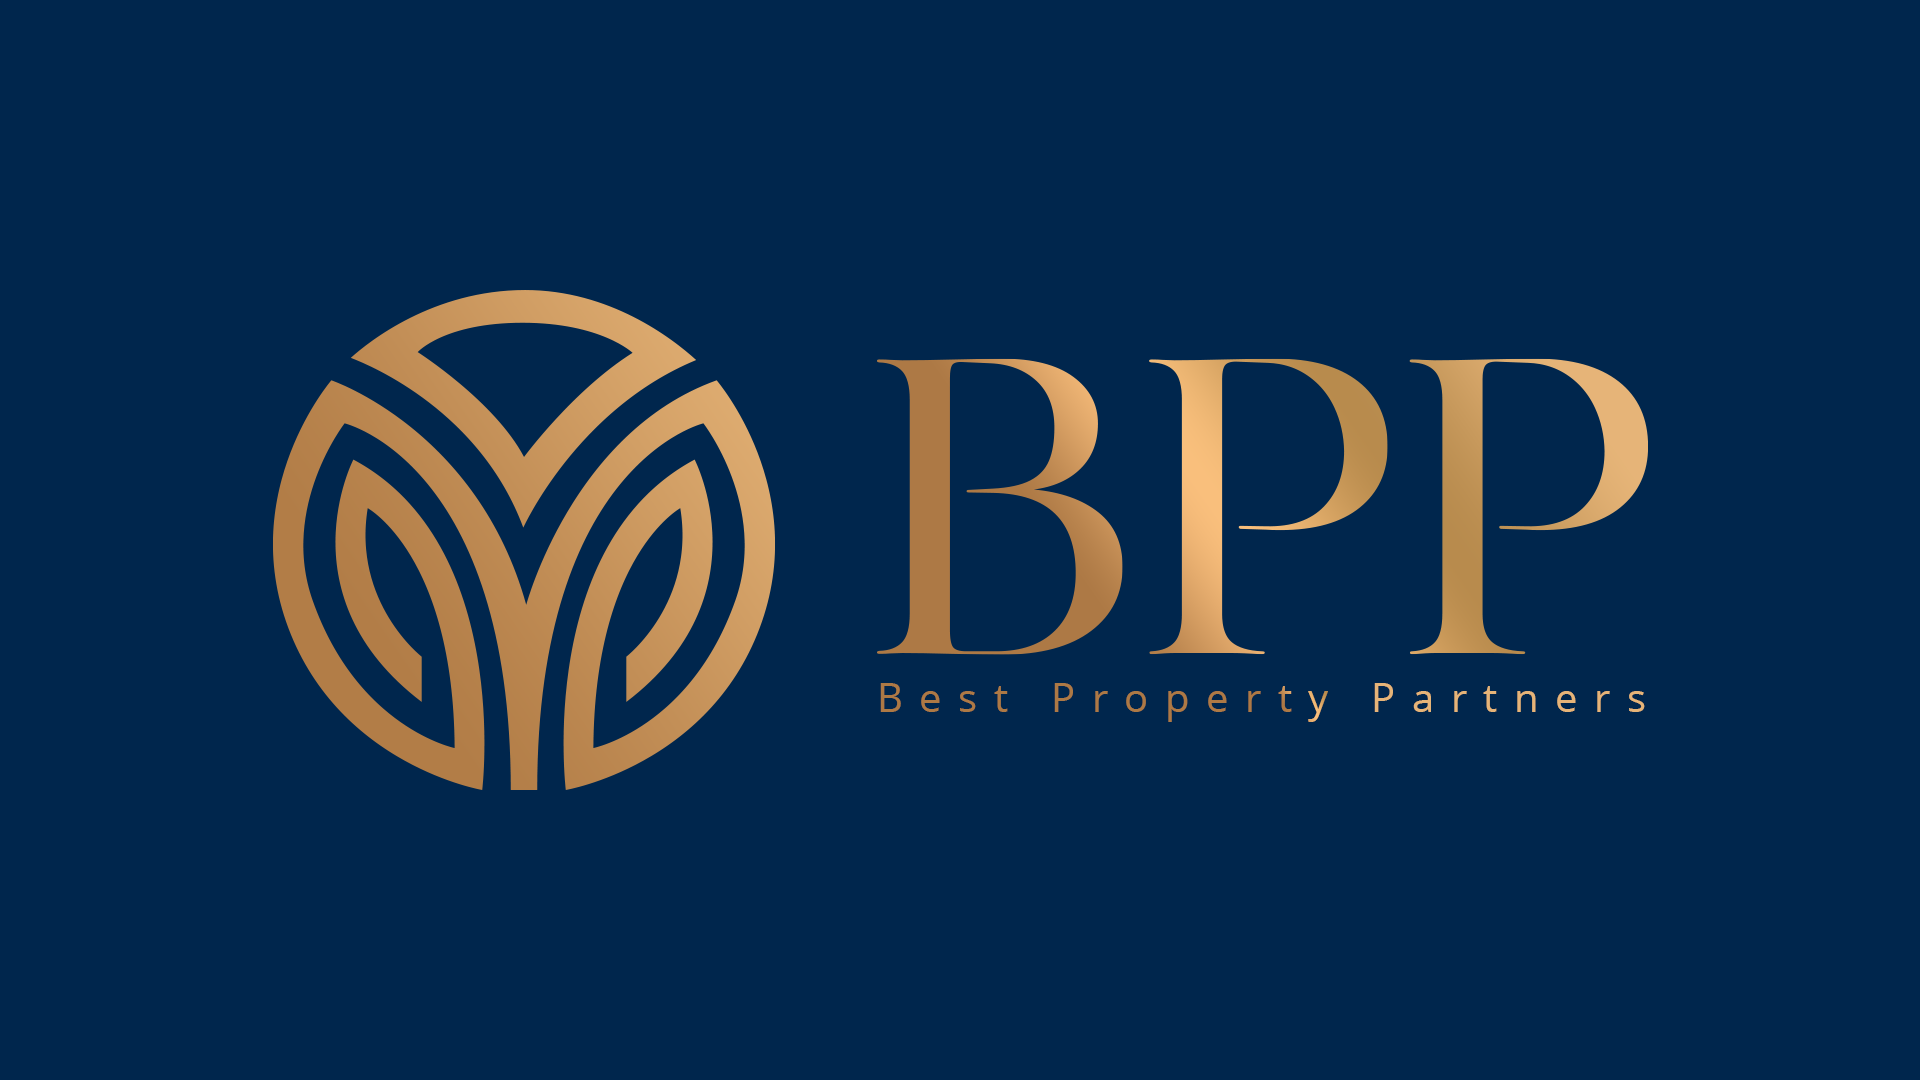 Best Property Partners